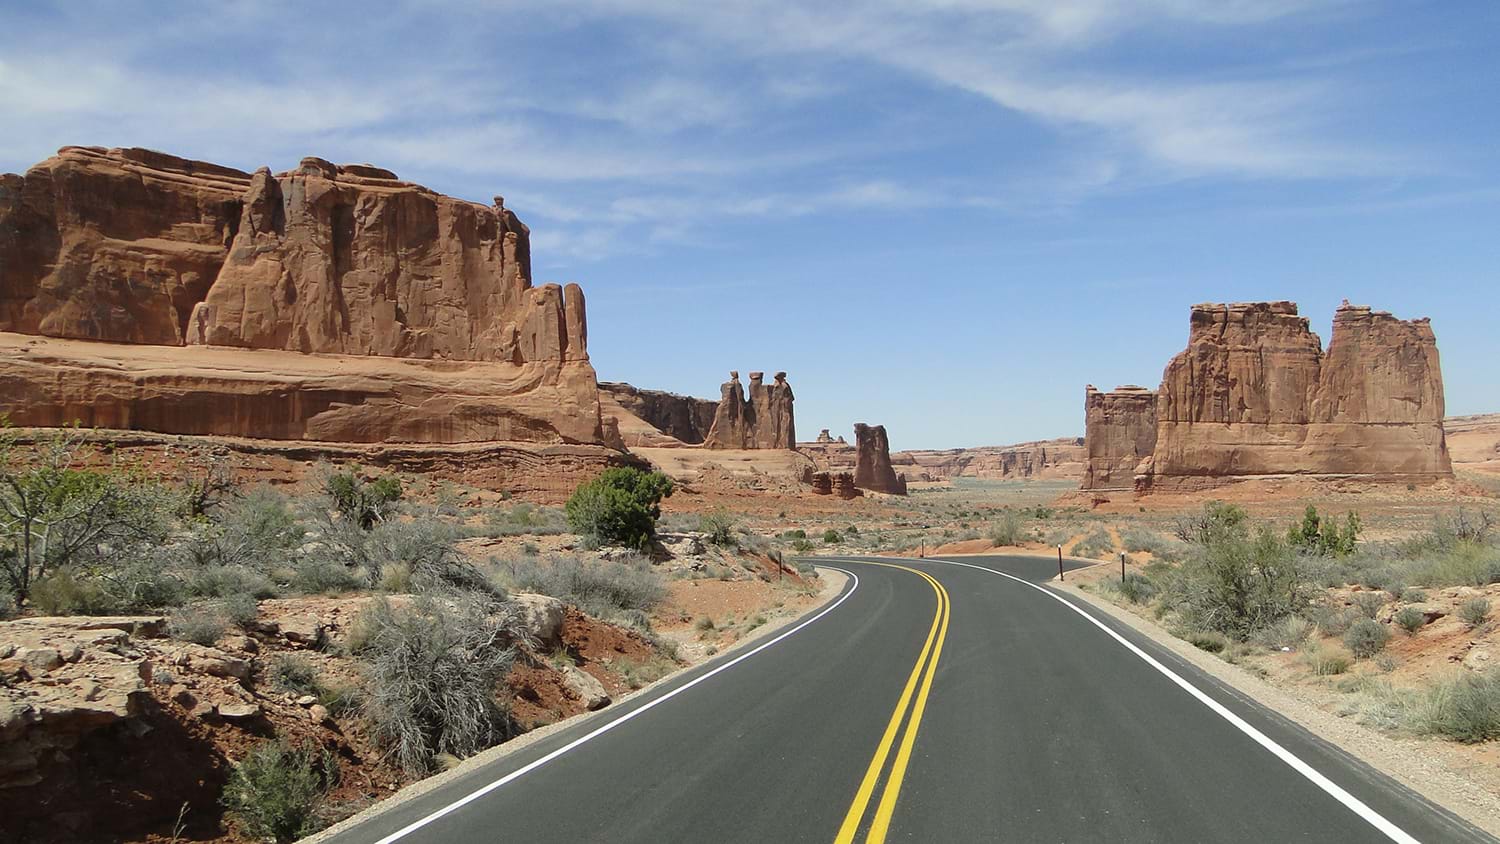 Desert highway passing through rock formations